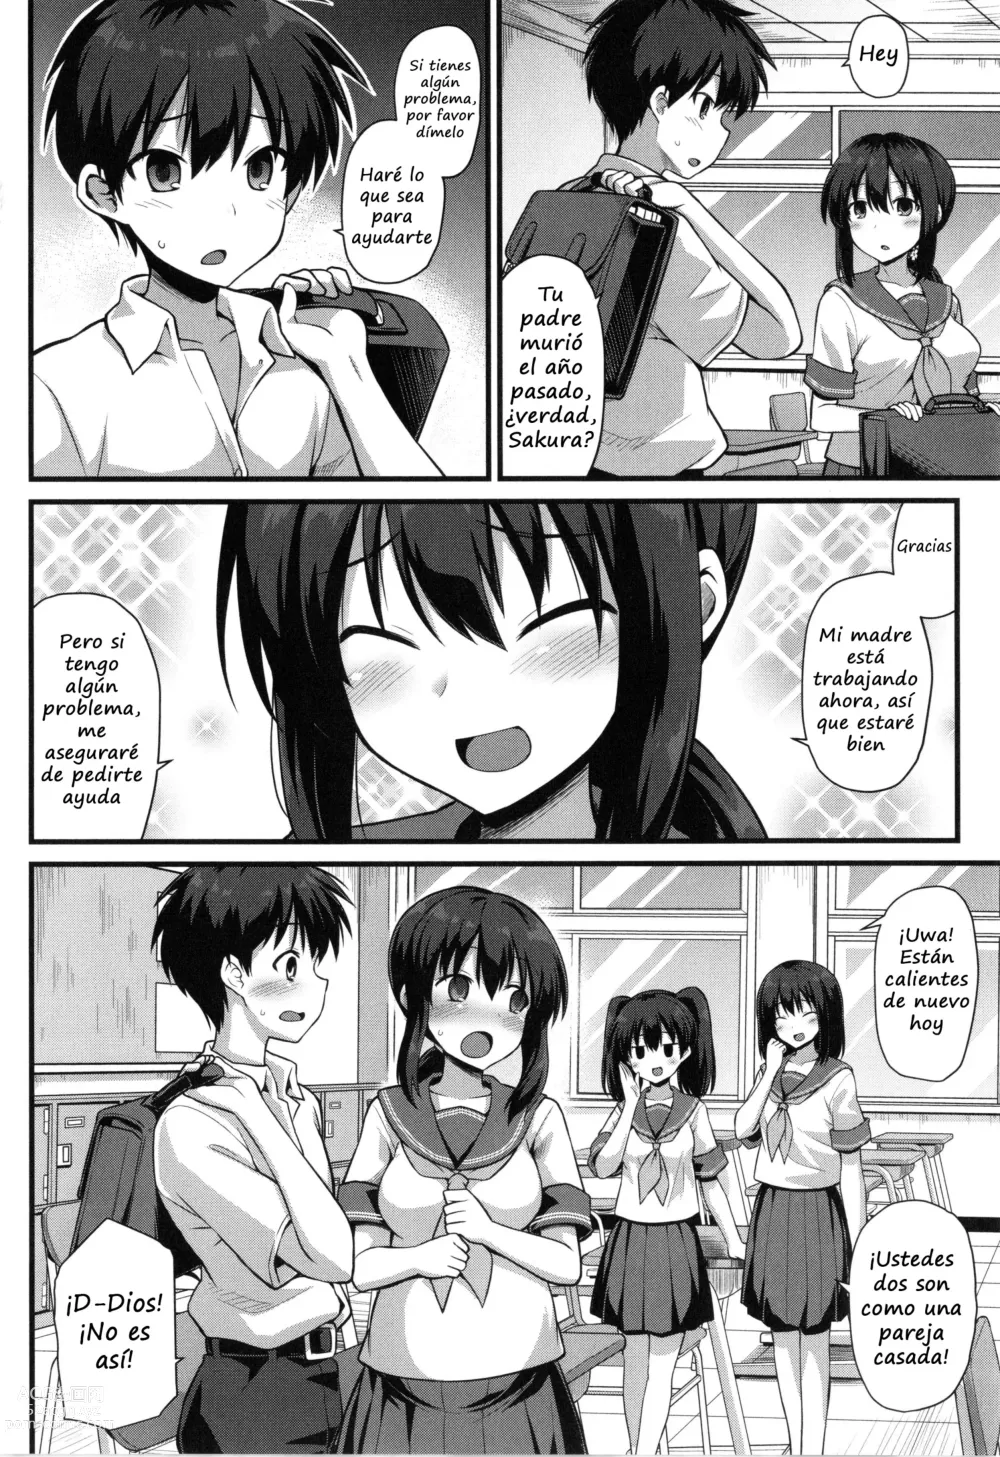 Page 6 of manga Haramase! Shiawase Oyakodon!